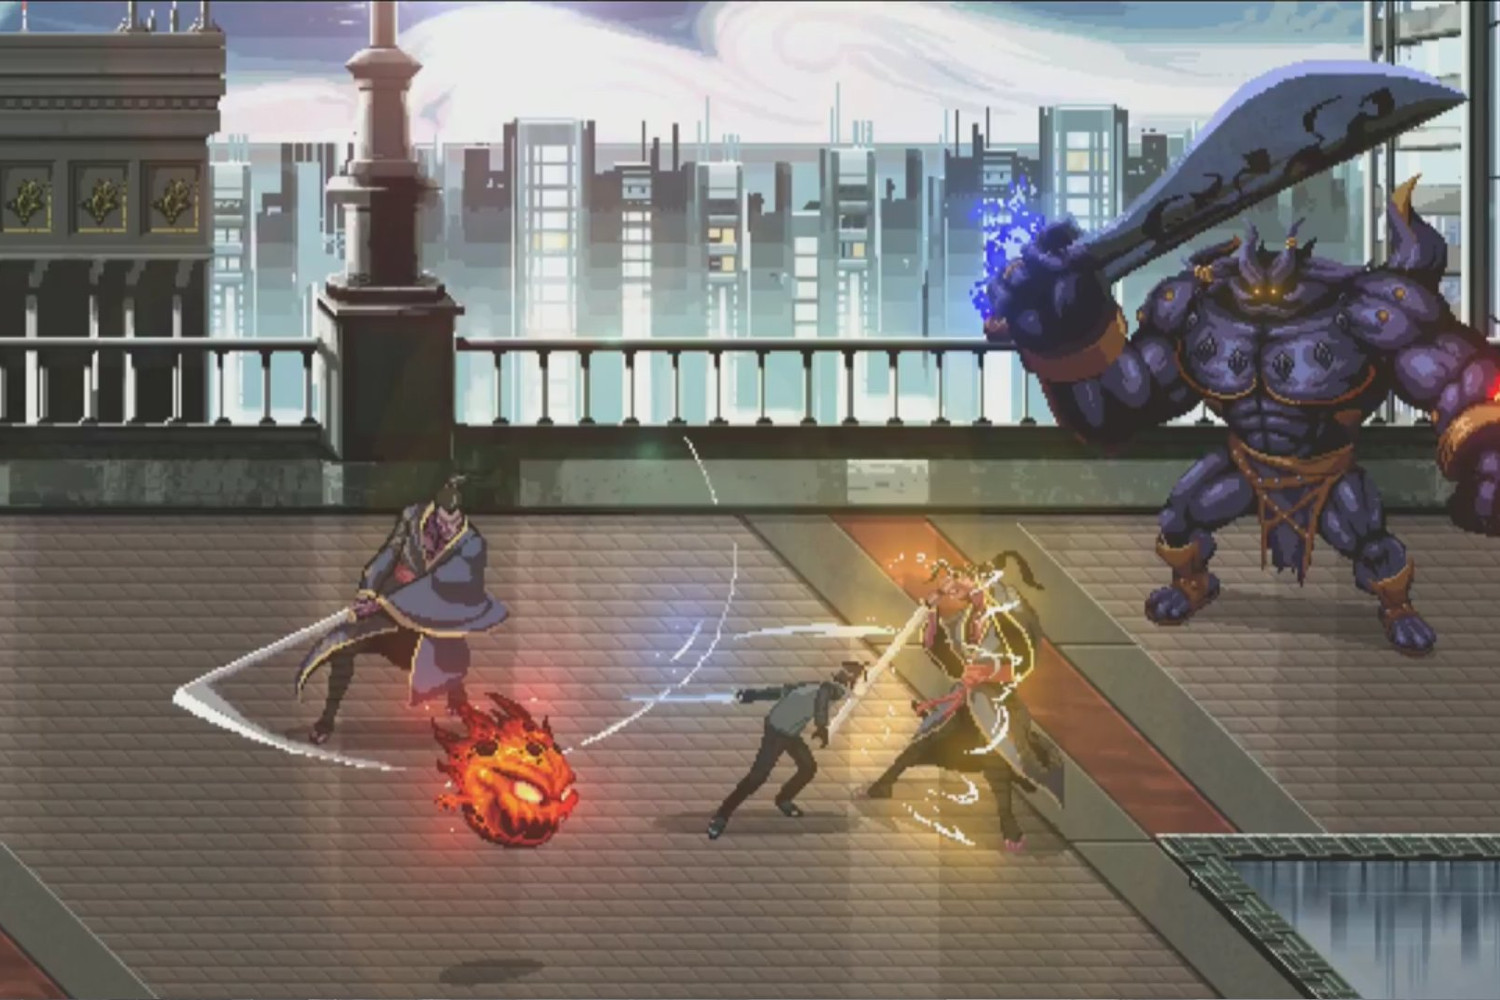 Final Fantasy XV Brotherhood - Episode 1 Review: Magic Swords